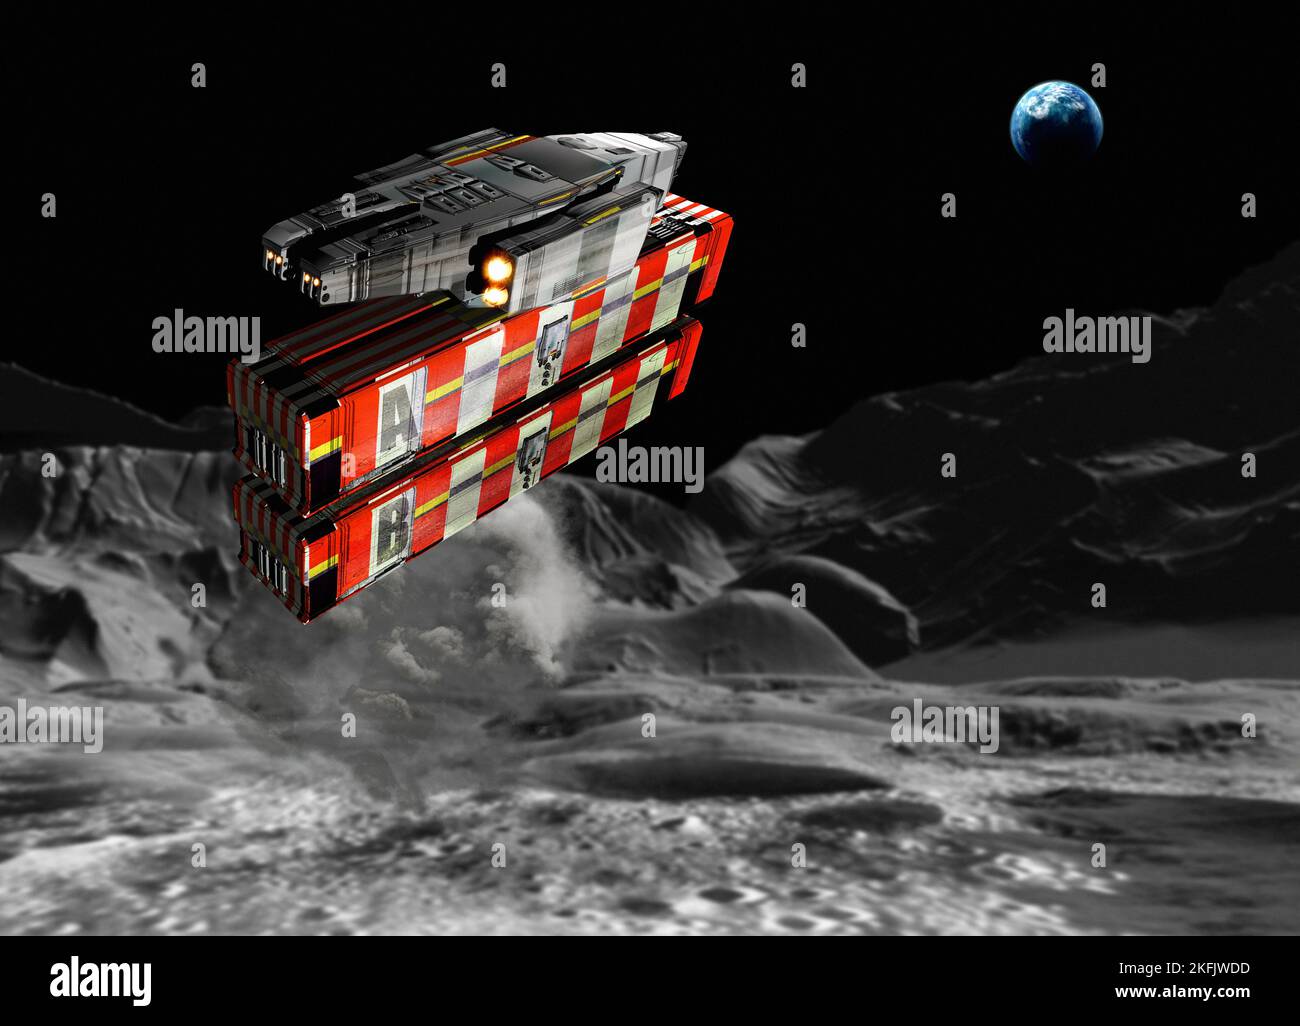 Moon mining cargo vehicle, conceptual illustration Stock Photo